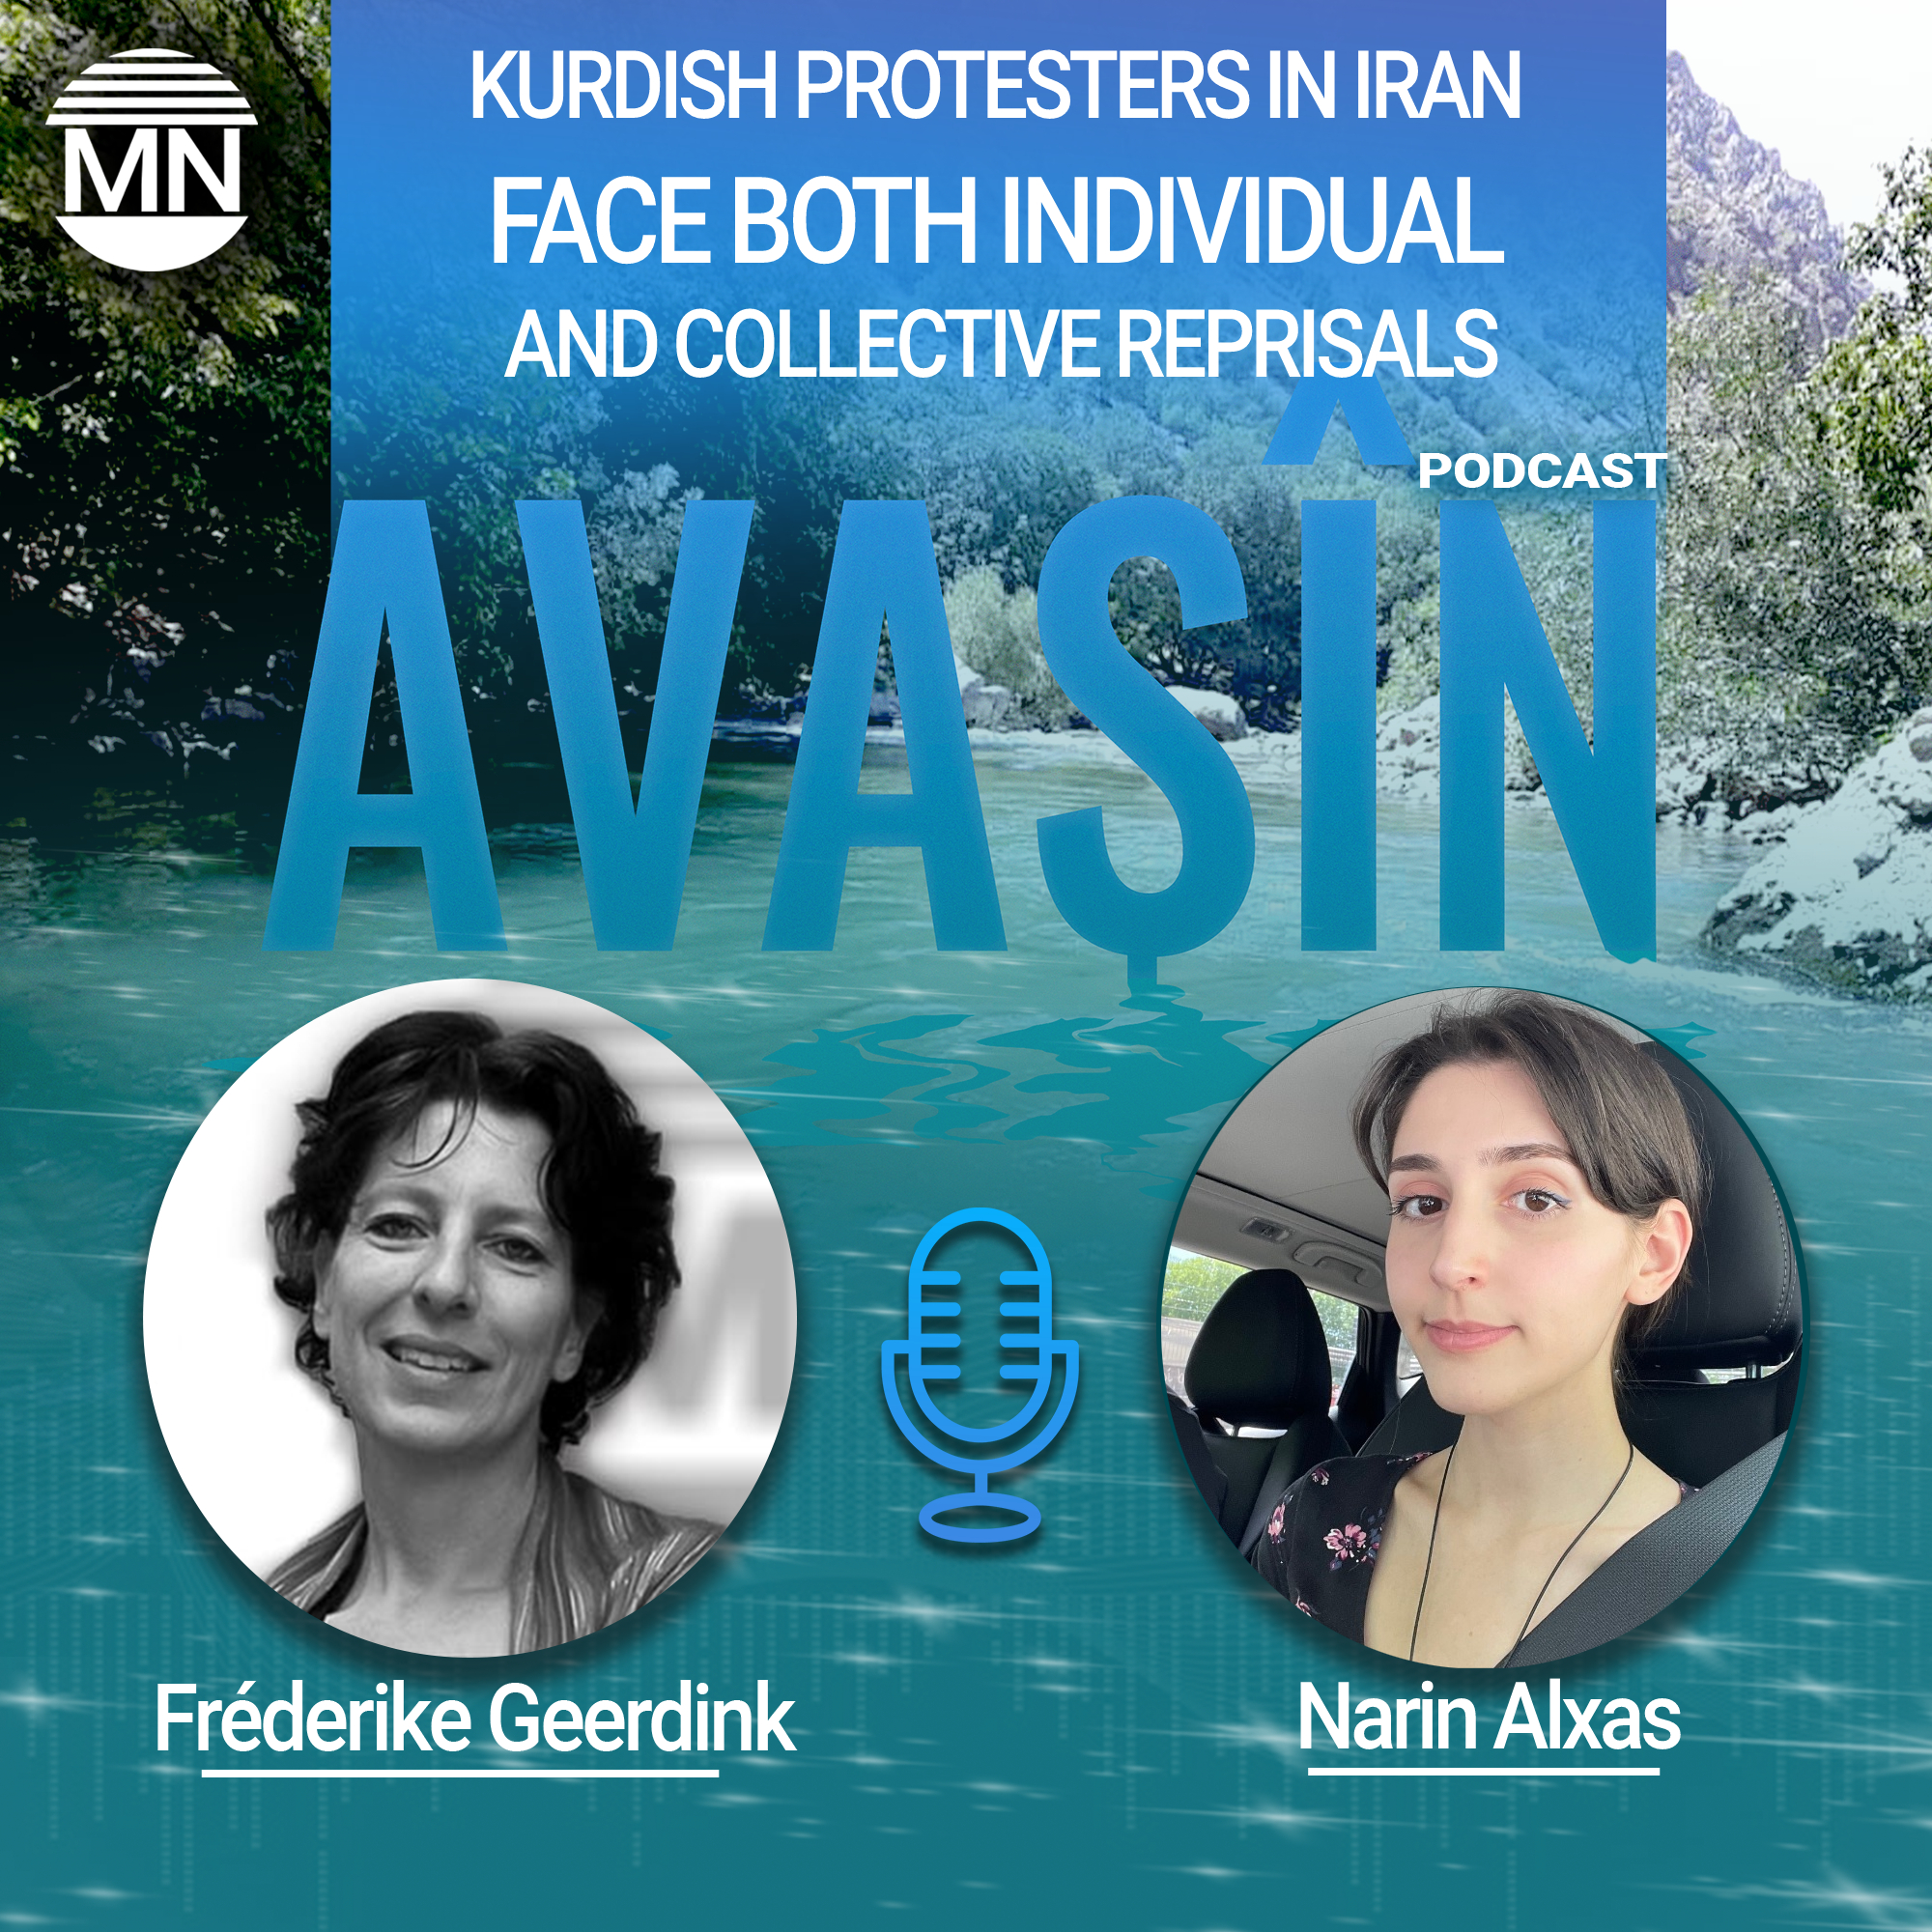 Narin Alxas draws attention to the Kurdish struggle in Iran